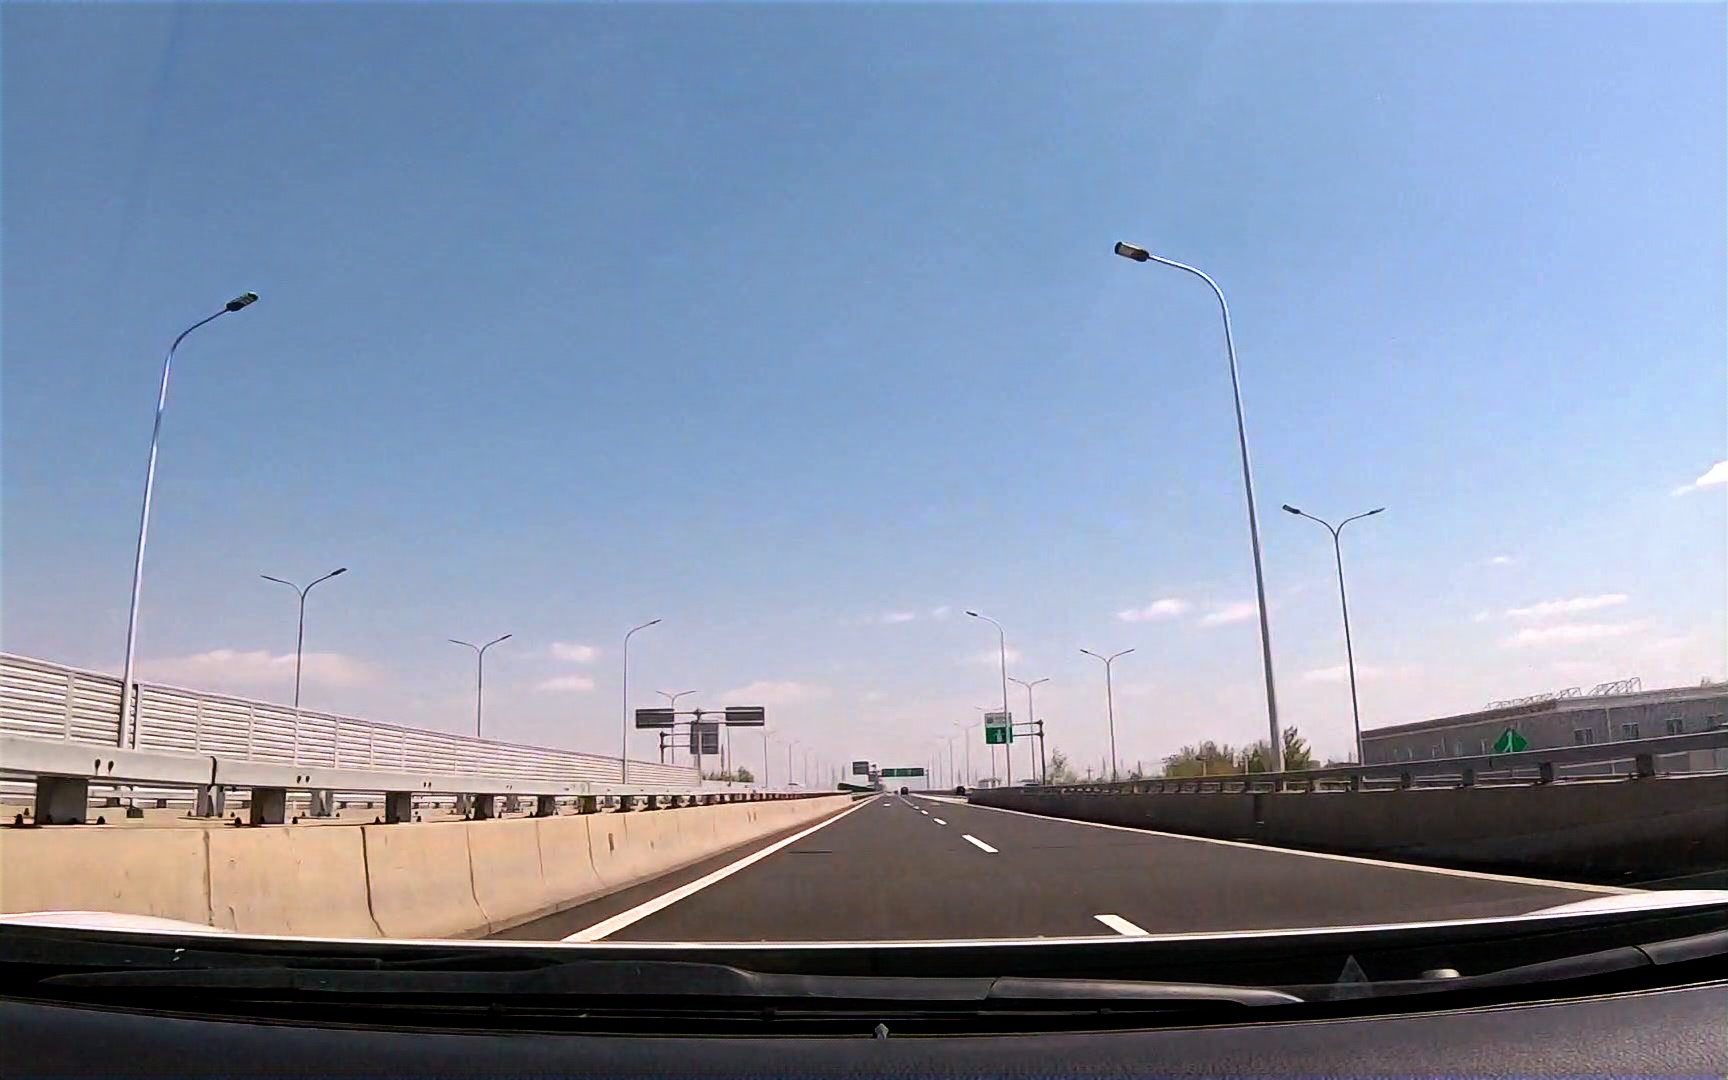 s32京平高速图片